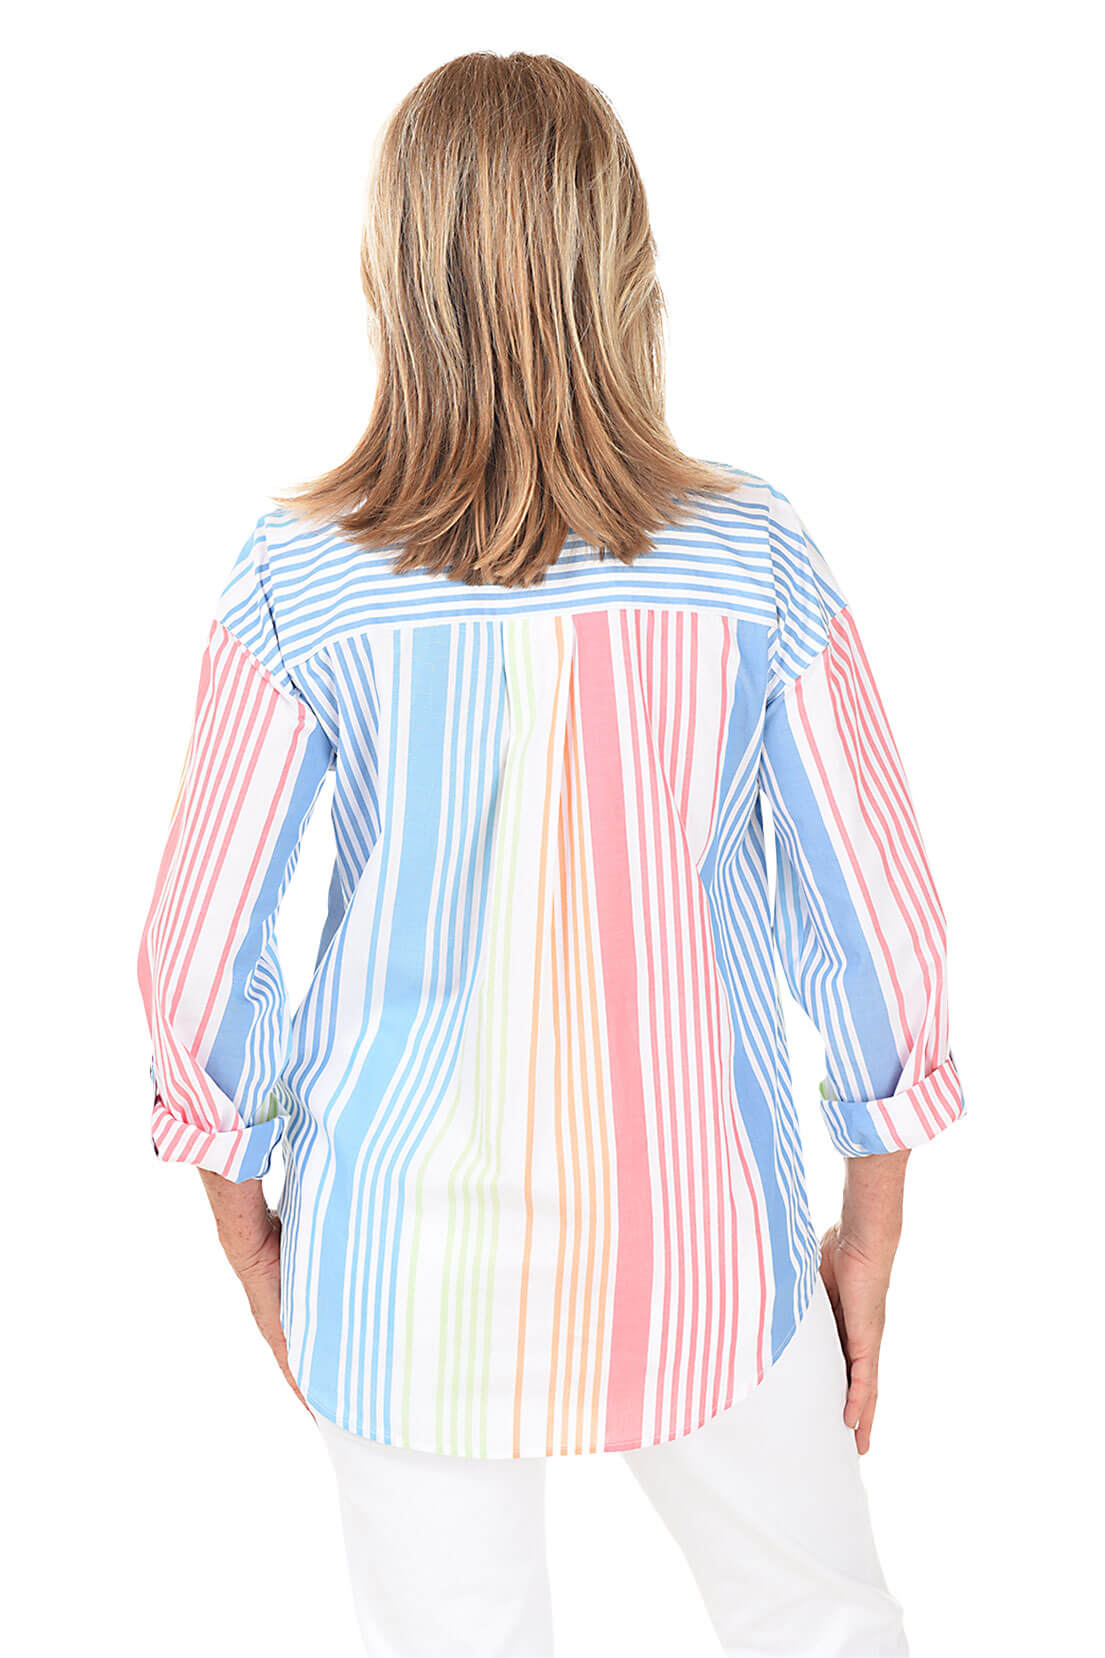 Petite Patio Party Colorful Striped Cotton Shirt